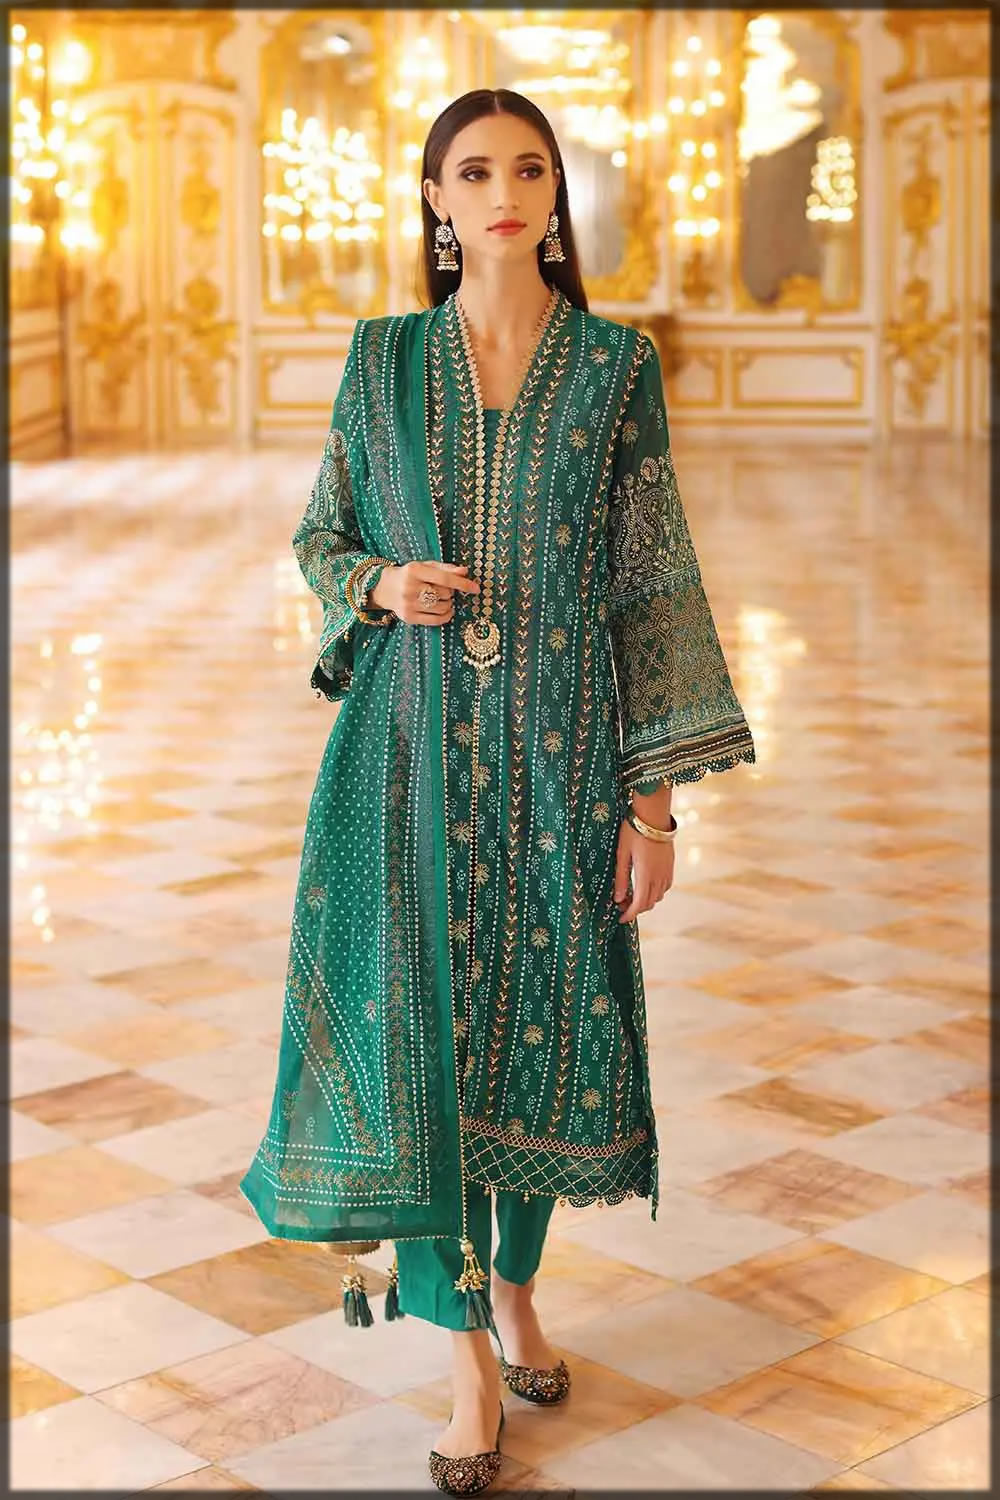 green shaded gul ahmed party wear dress for women - Copy